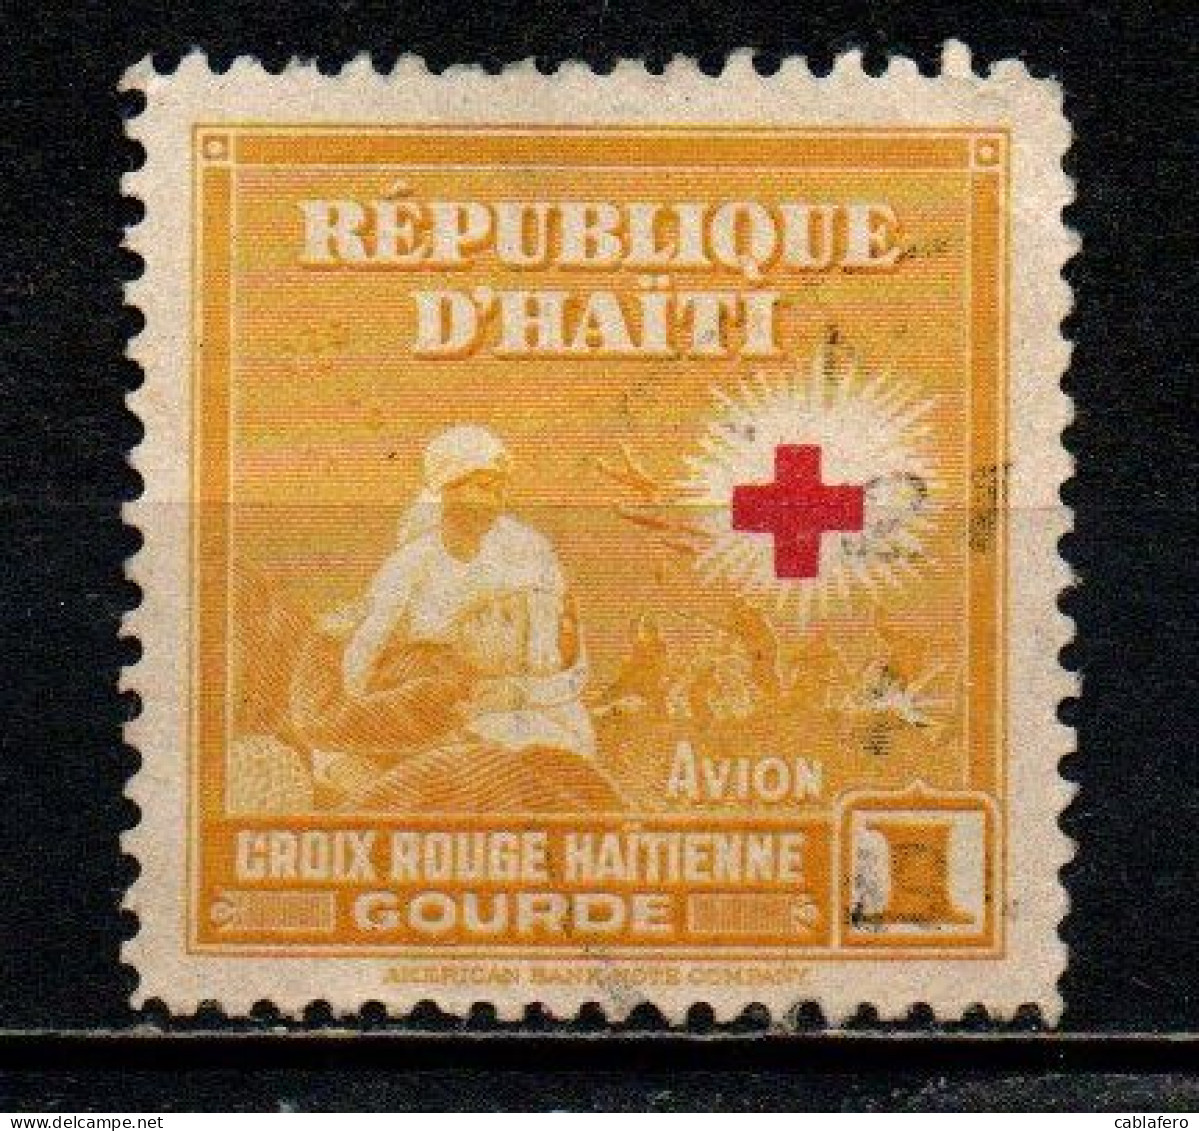 HAITI - 1945 -  CROCE ROSSA - USATO - Haiti